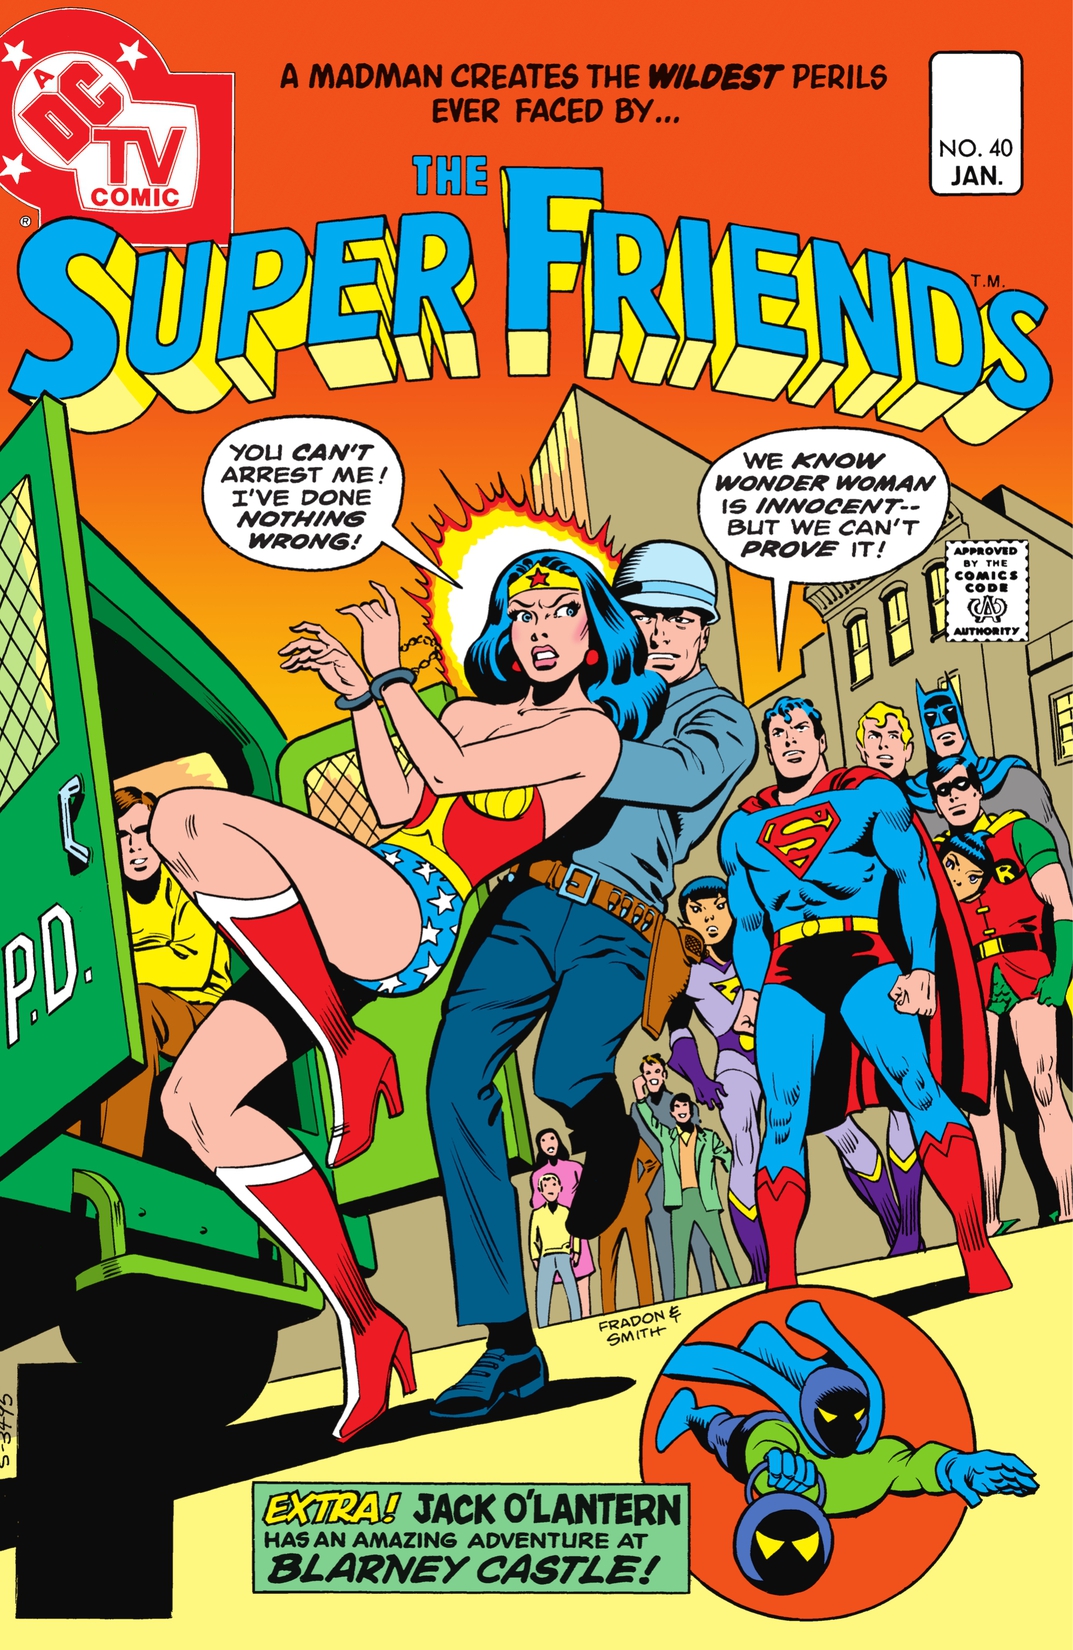 Super Friends (1976-1981) #40 preview images